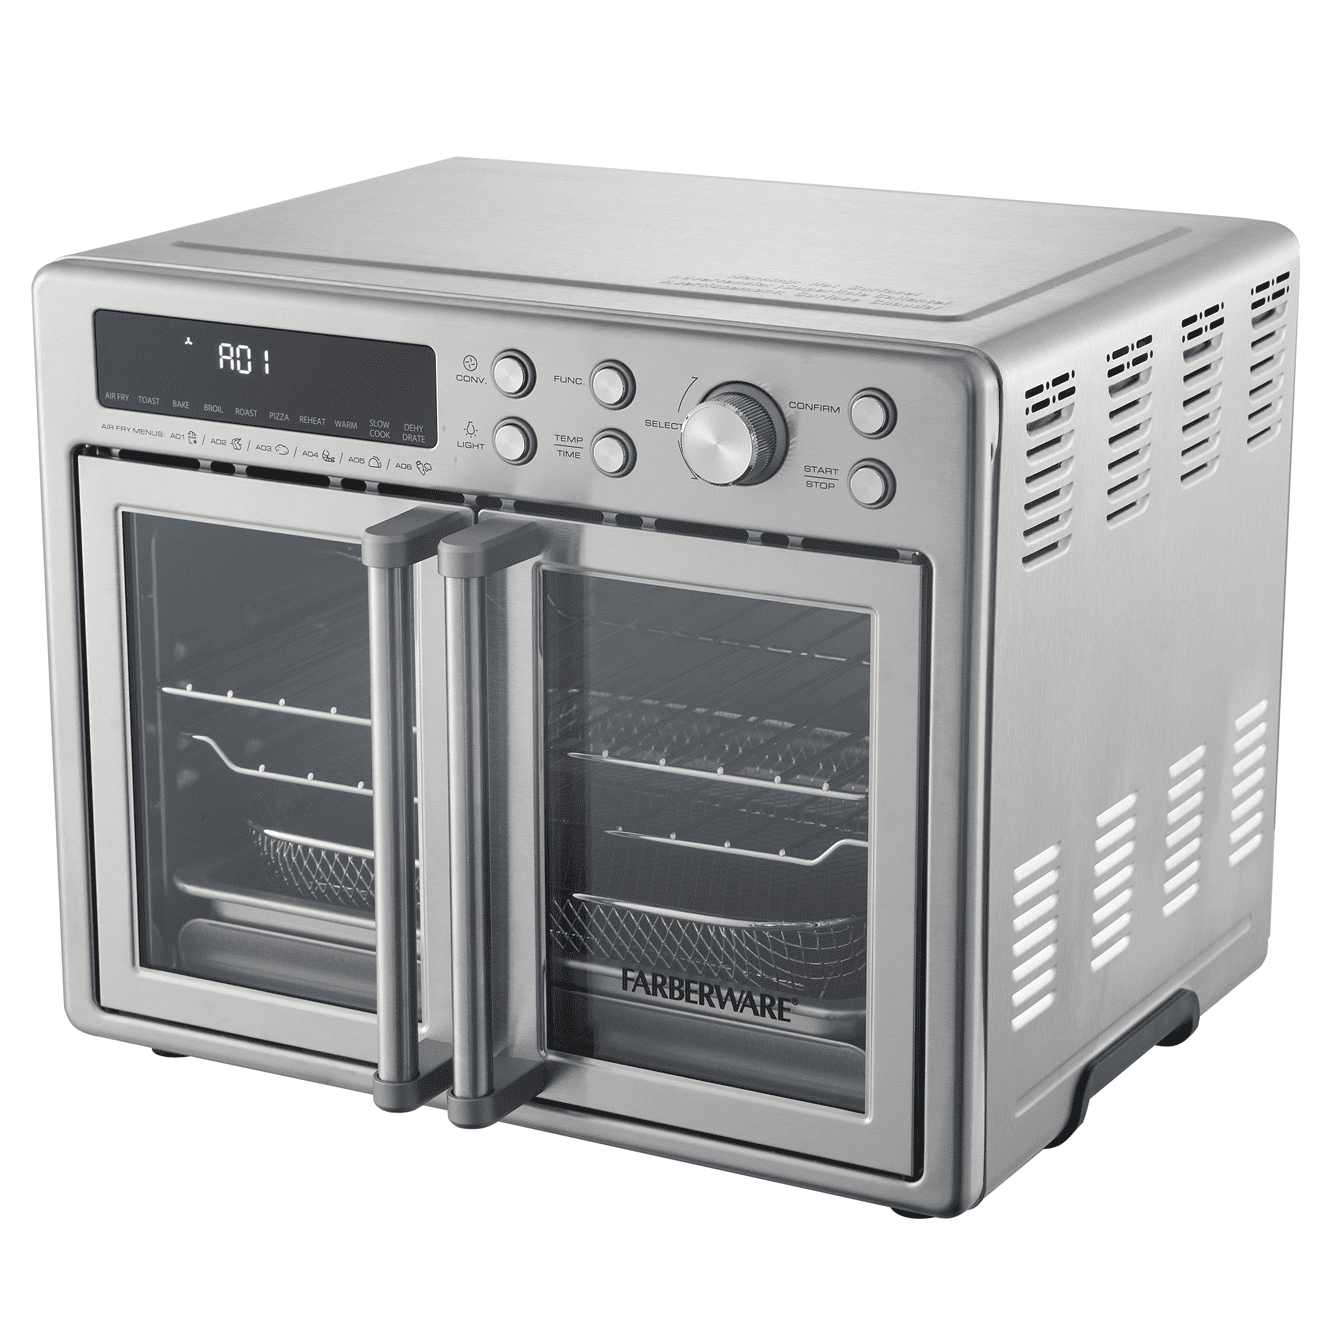 Farberware Air Fryer Toaster Oven for Sale in Phoenix, AZ - OfferUp